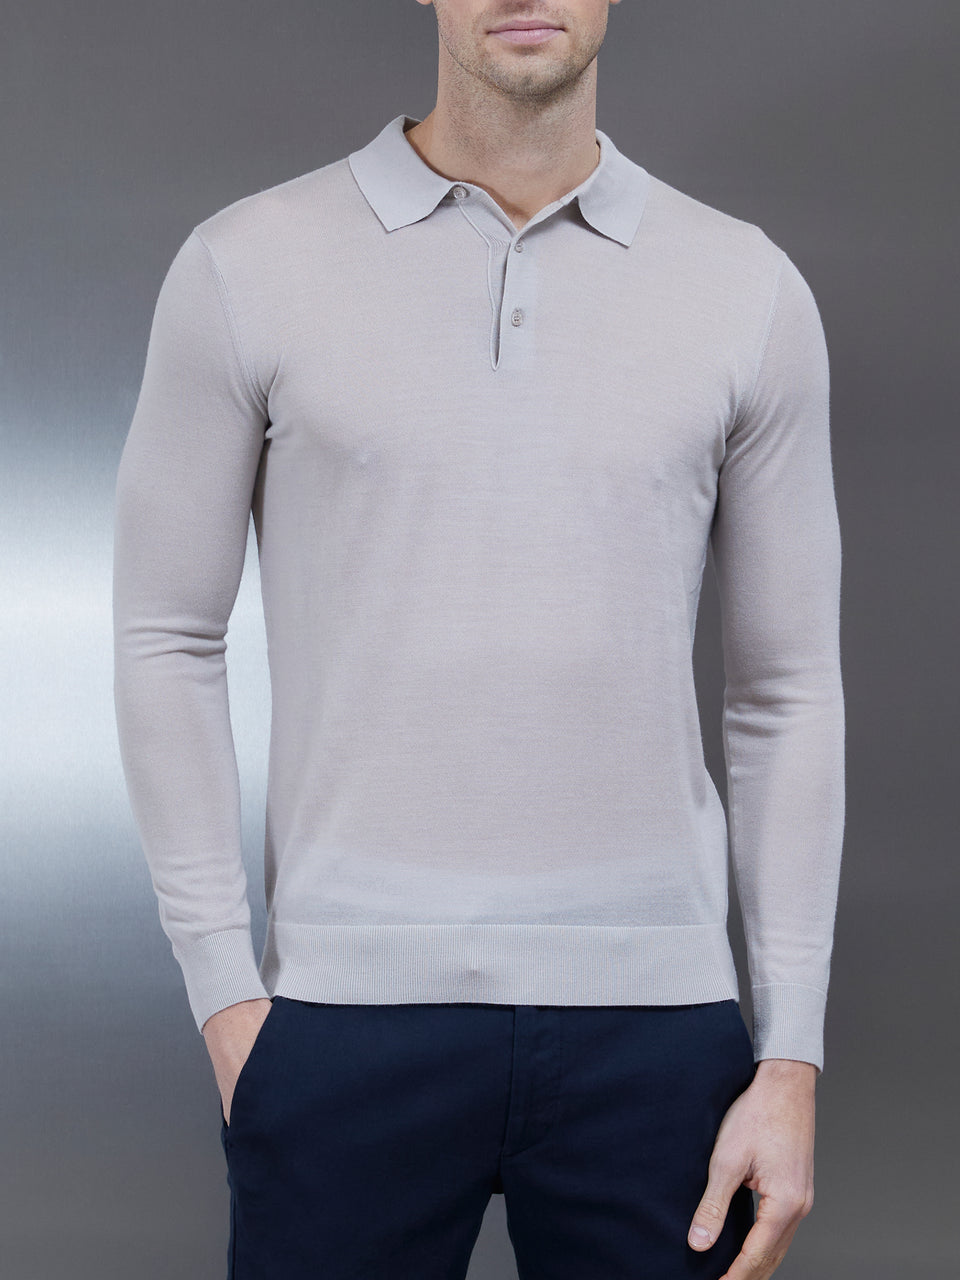 Merino Wool Long Sleeve Button Polo Shirt in Stone